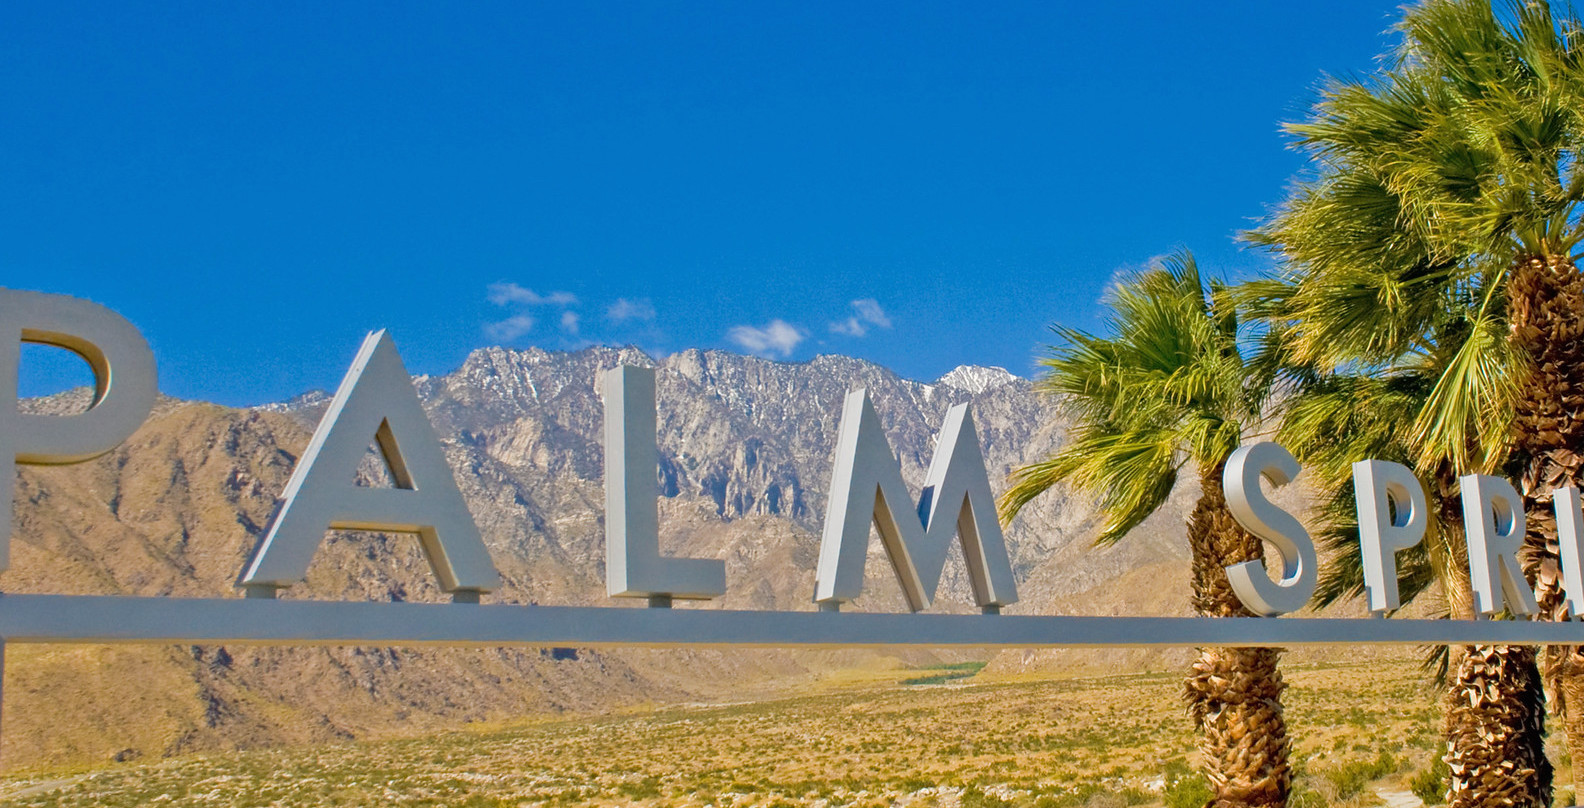 Palm Springs sign. Image: Randy Heinitz/Flickr